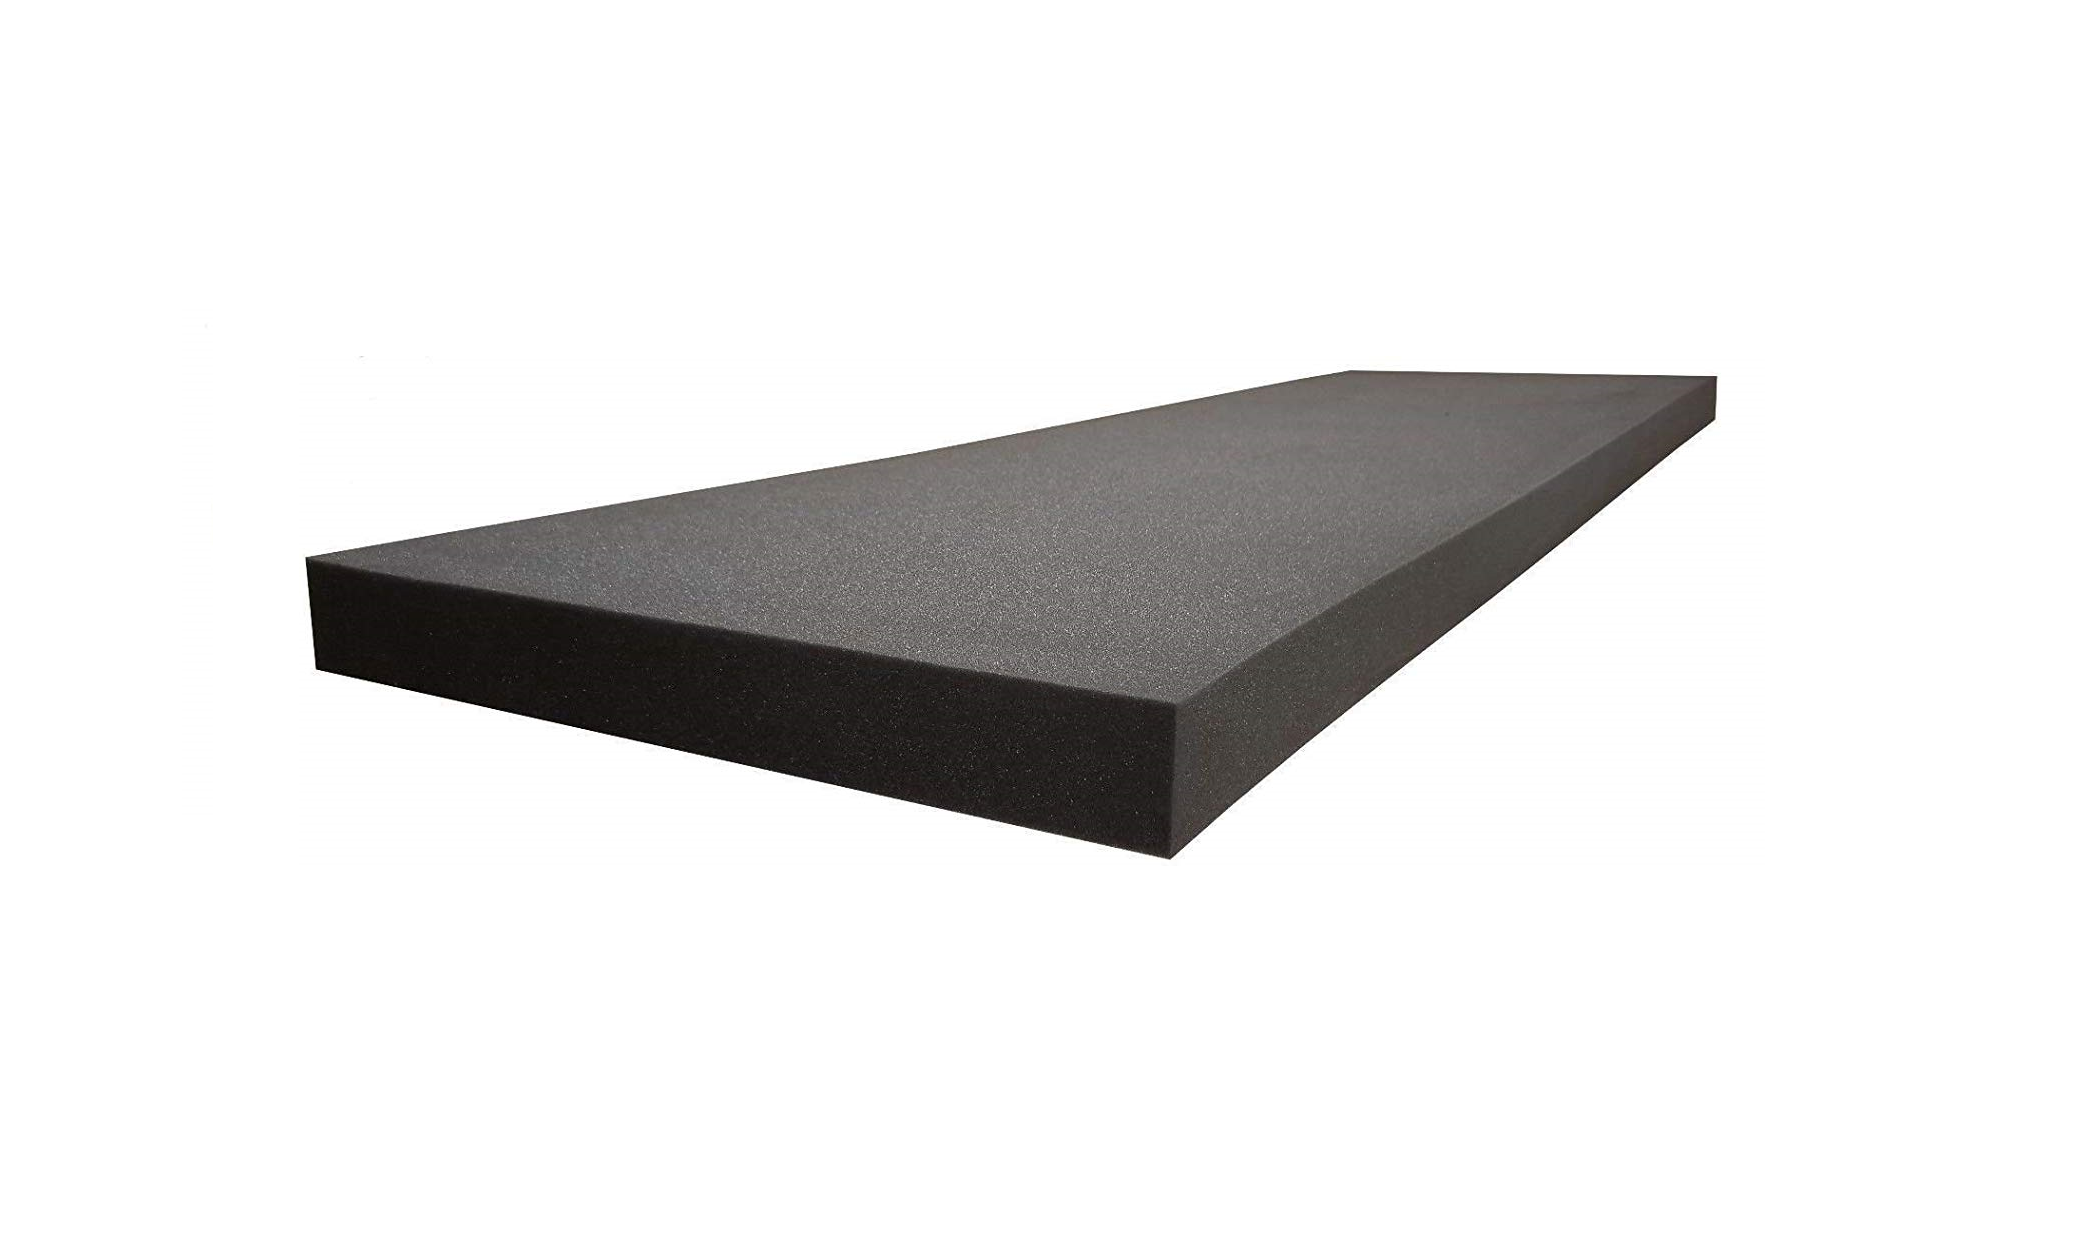 4 x 24x 24 Upholstery Foam Cushion Medium Density (Seat Replacement,  Upholstery Sheet, Foam Padding)